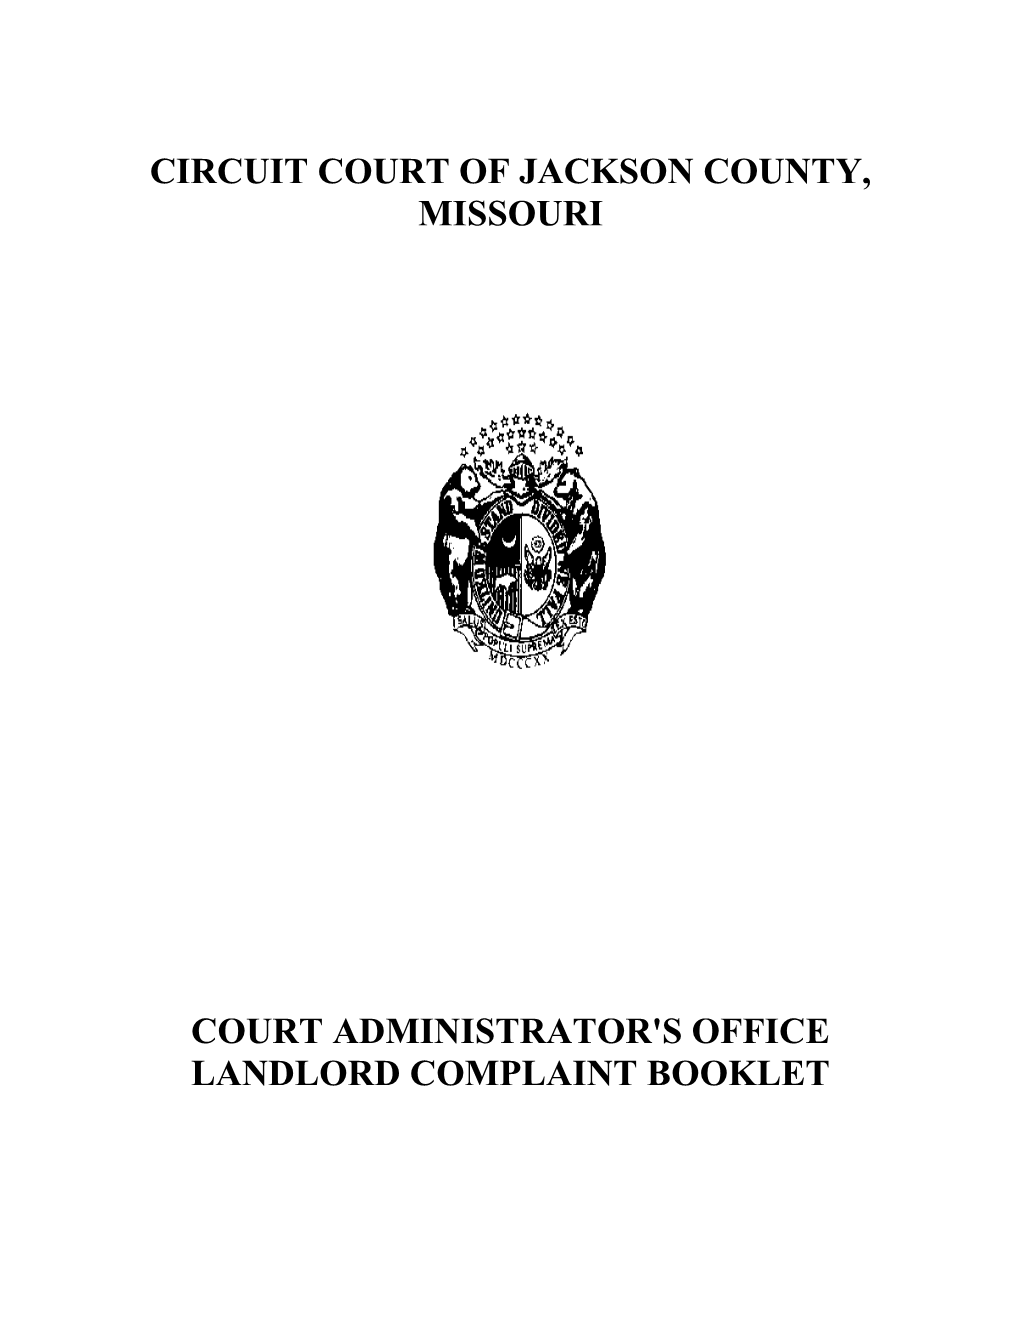 Circuit Court of Jackson County, Missouri